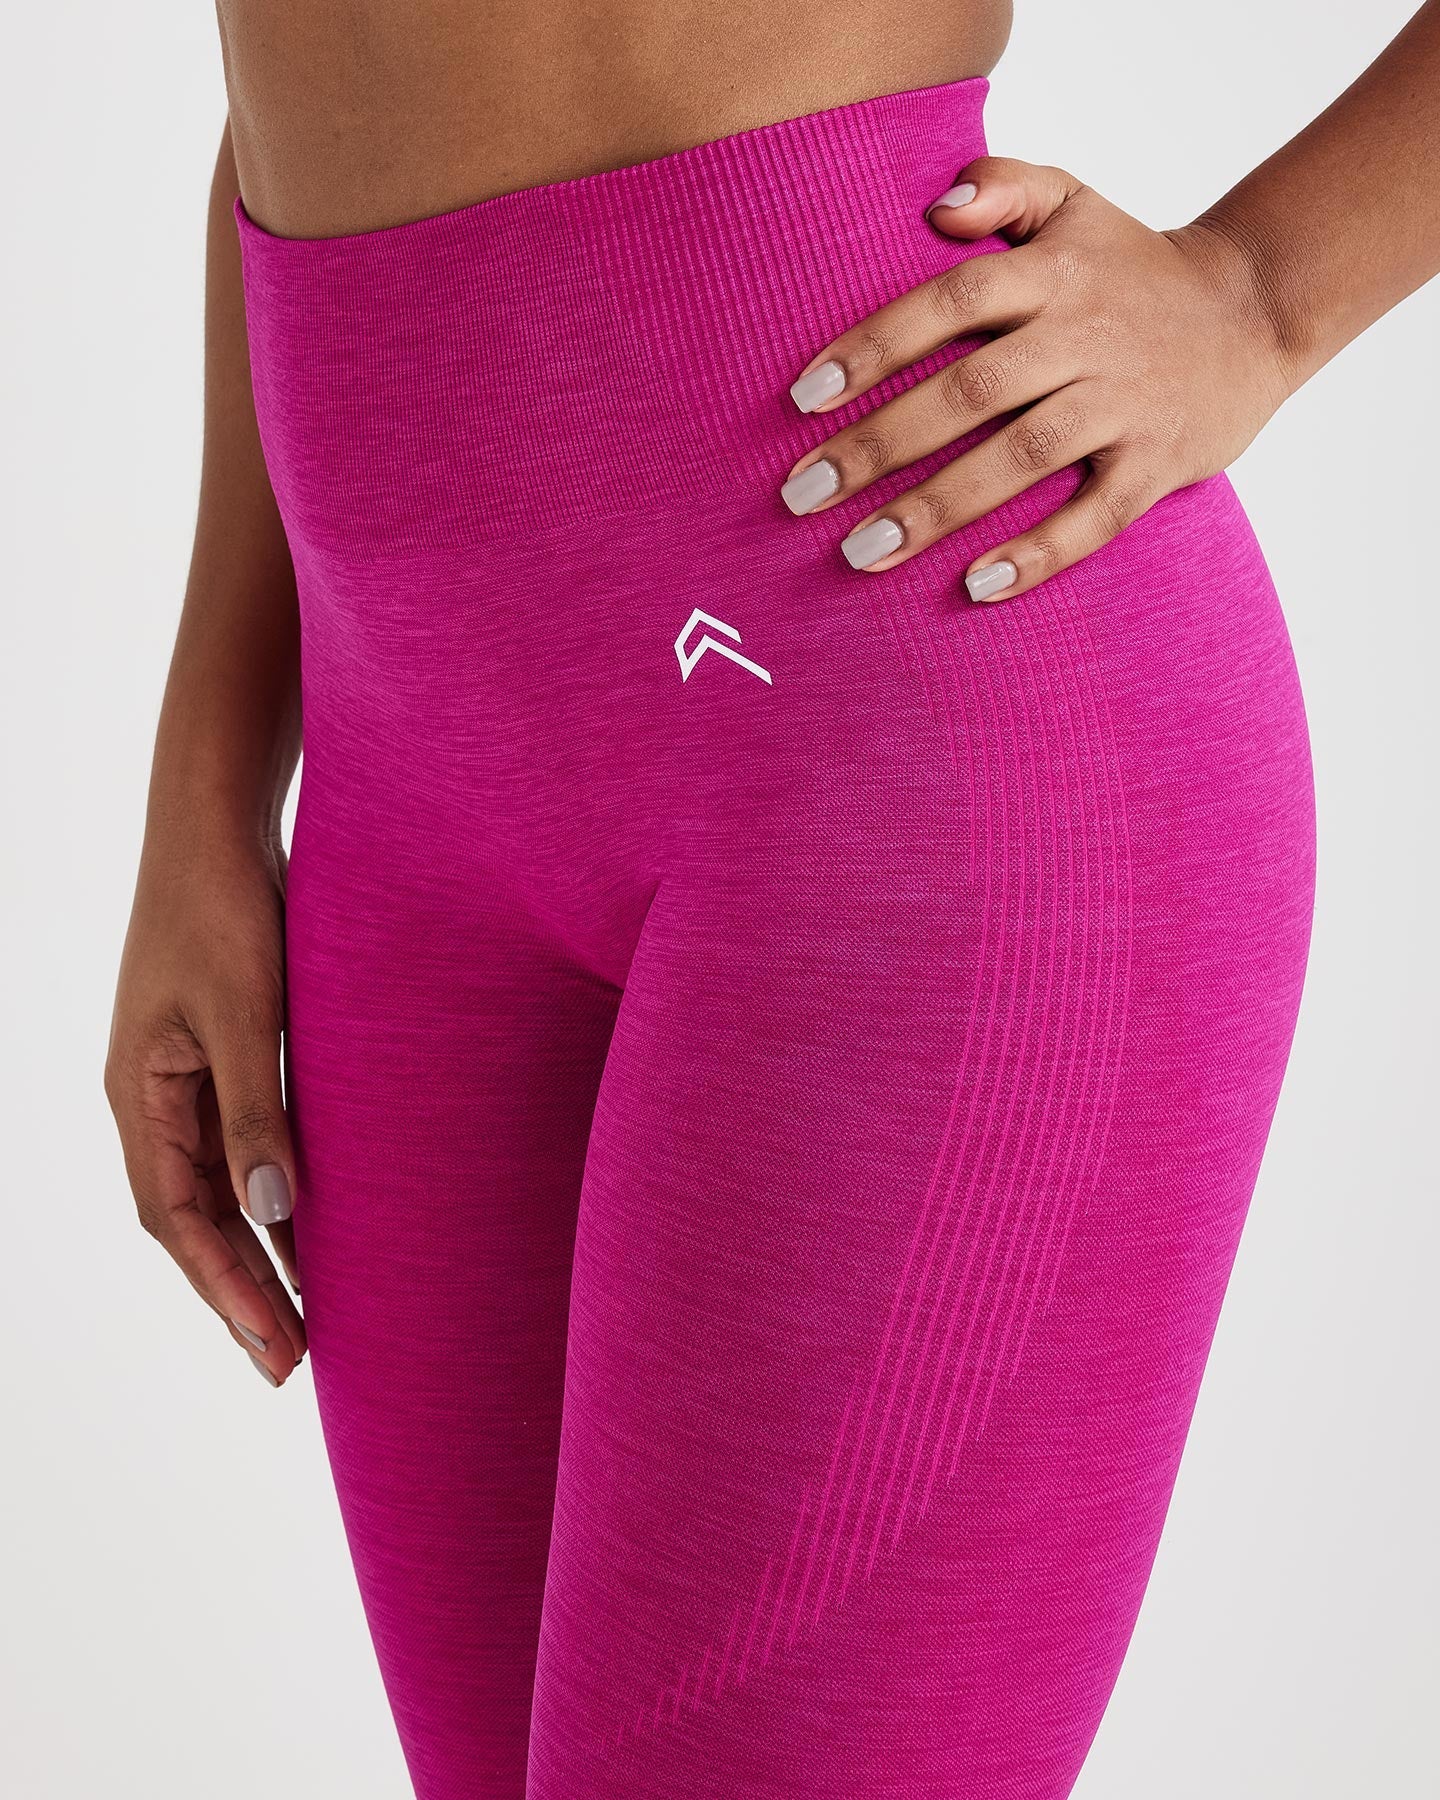 ONeill Womens Active Pink Green Print 7/8 Leggings: L - Tallington